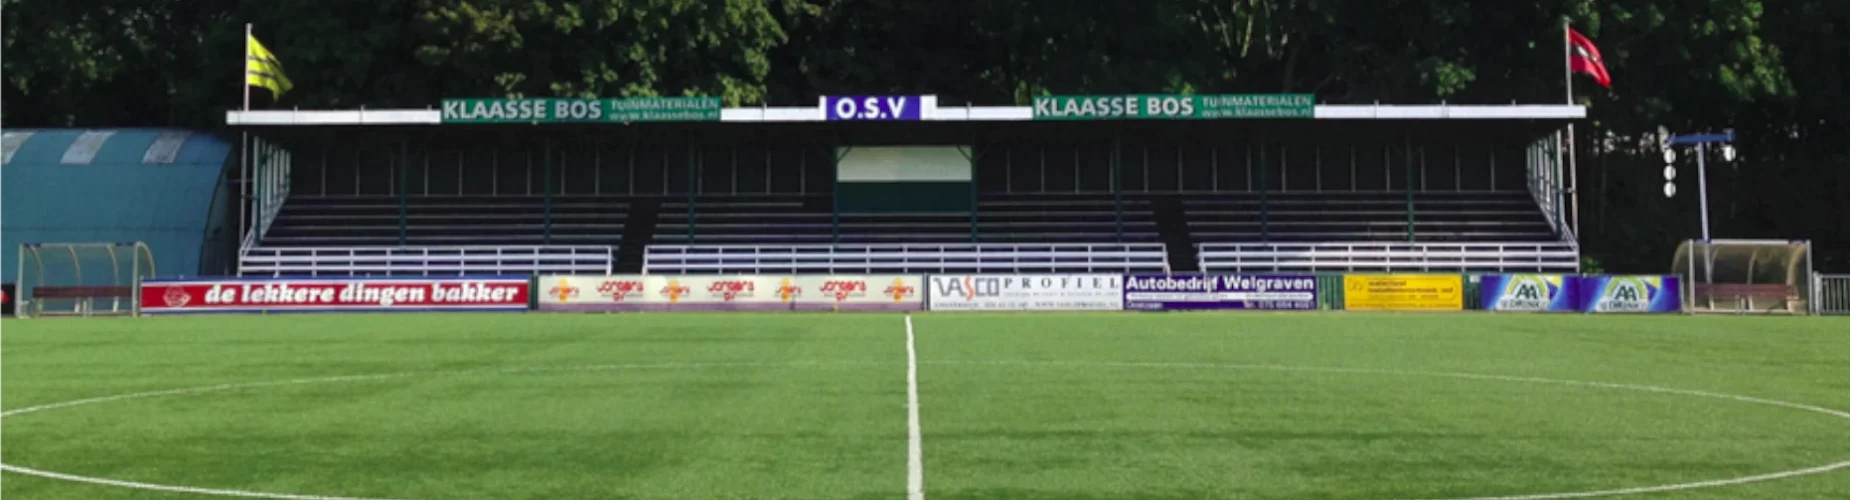 Banner - OSV - Amsterdam